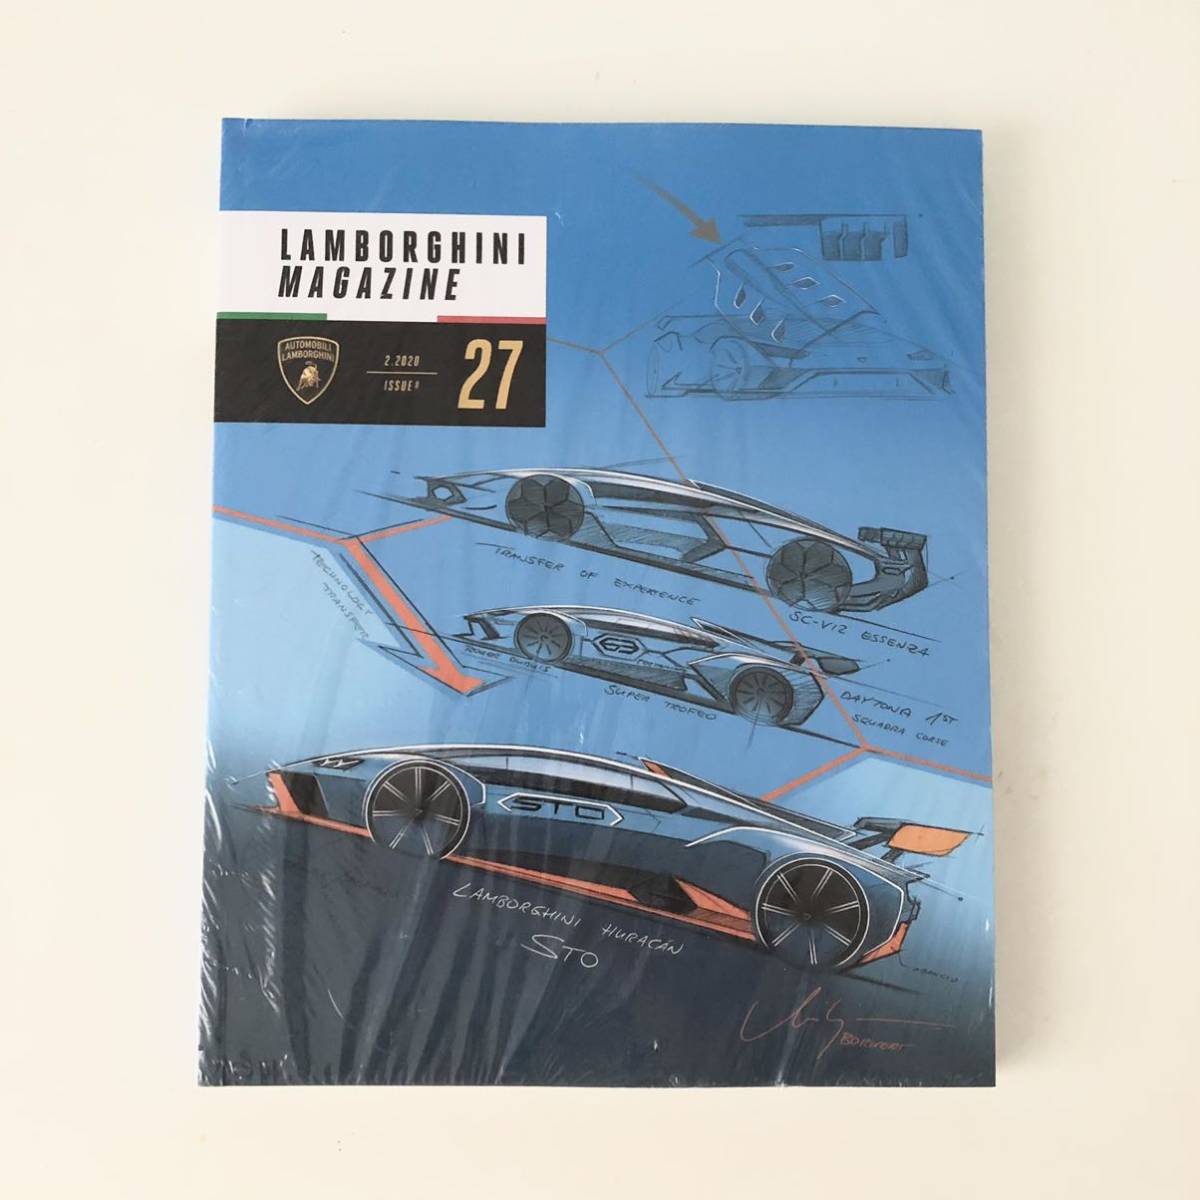 [ hard-to-find ] Lamborghini magazine 27 LAMBORGHINI MAGAZINE new goods 2020